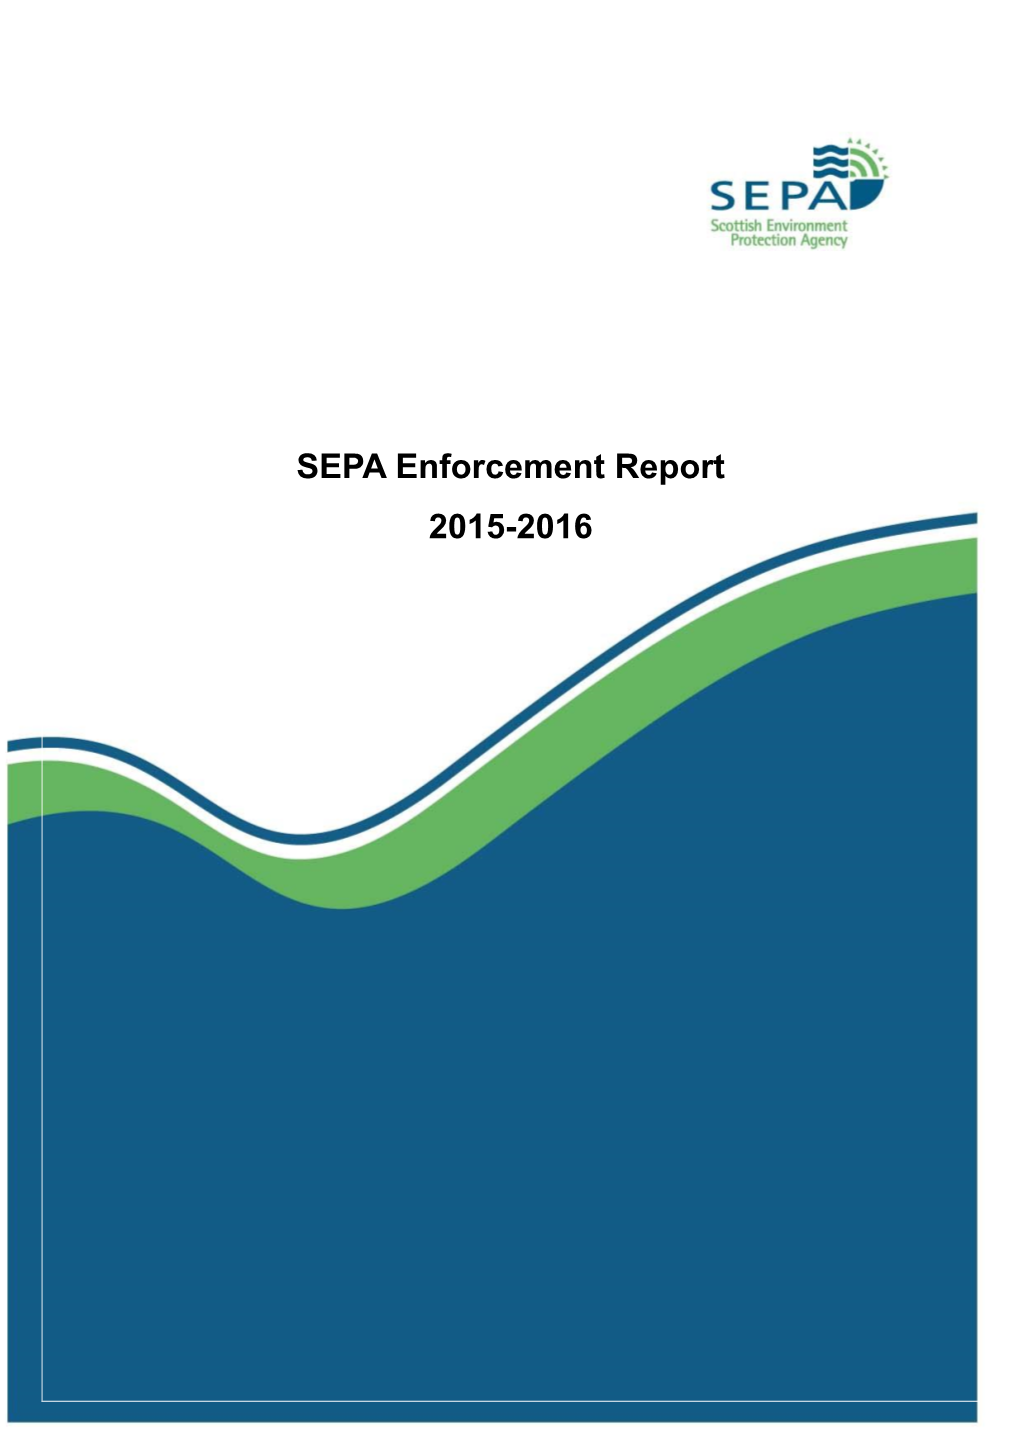 SEPA Enforcement Report 2015-2016